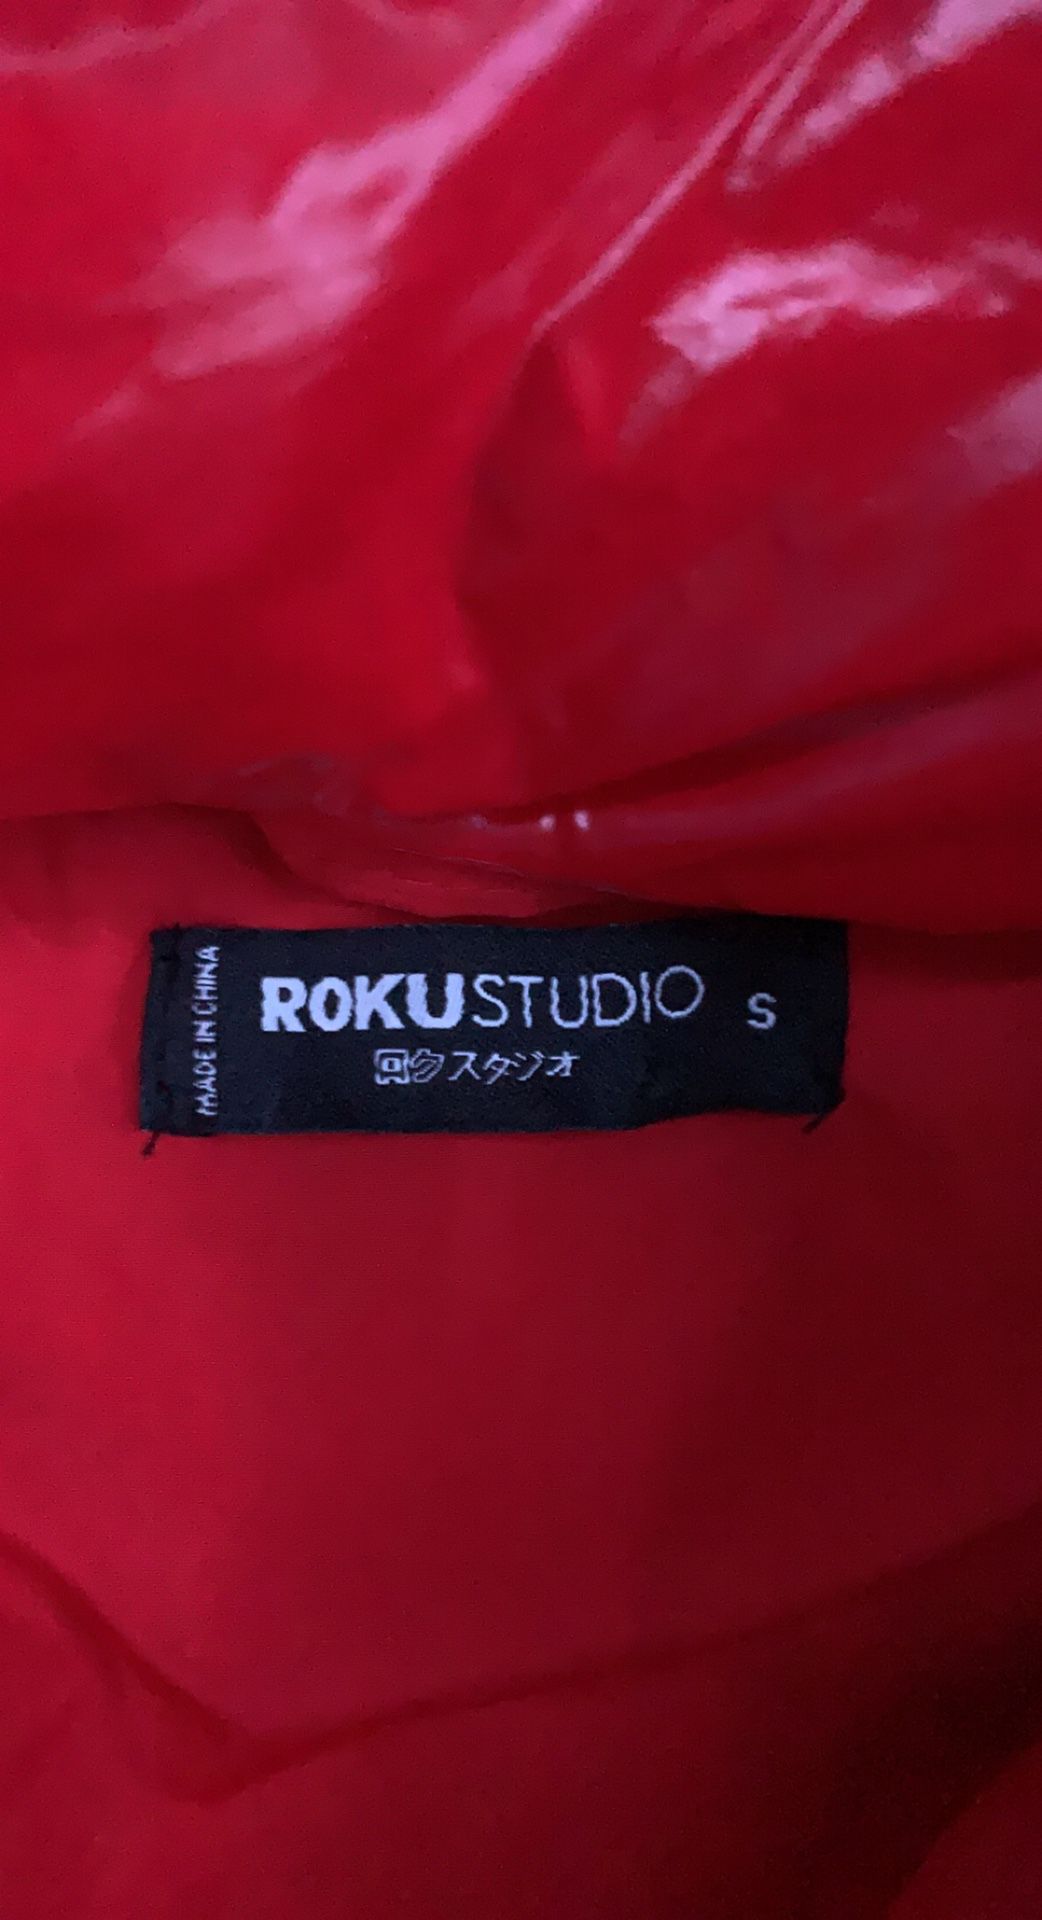 Roku Studio - Modern Camo Slick Eye Puffer Jacket (Olive) – Octane